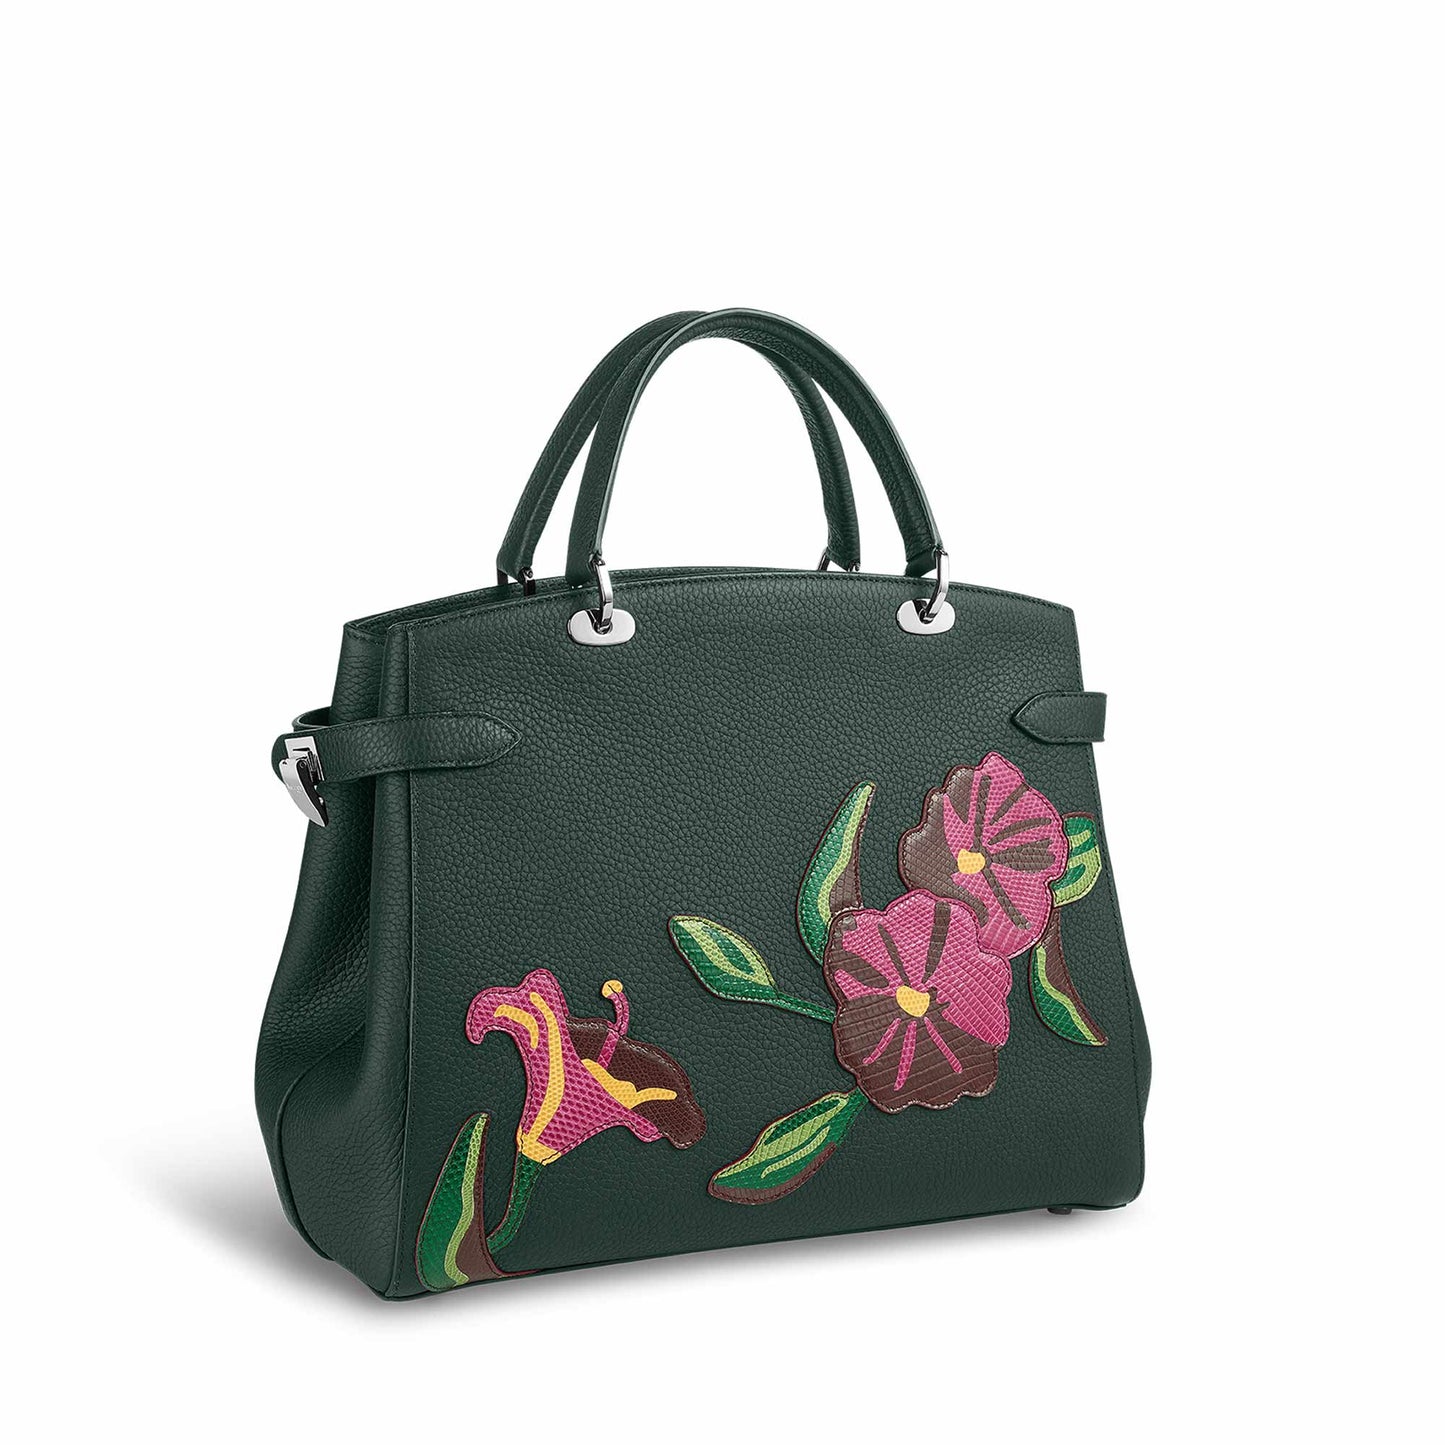 Taylor Floral Handbag in Soft Grain Leather